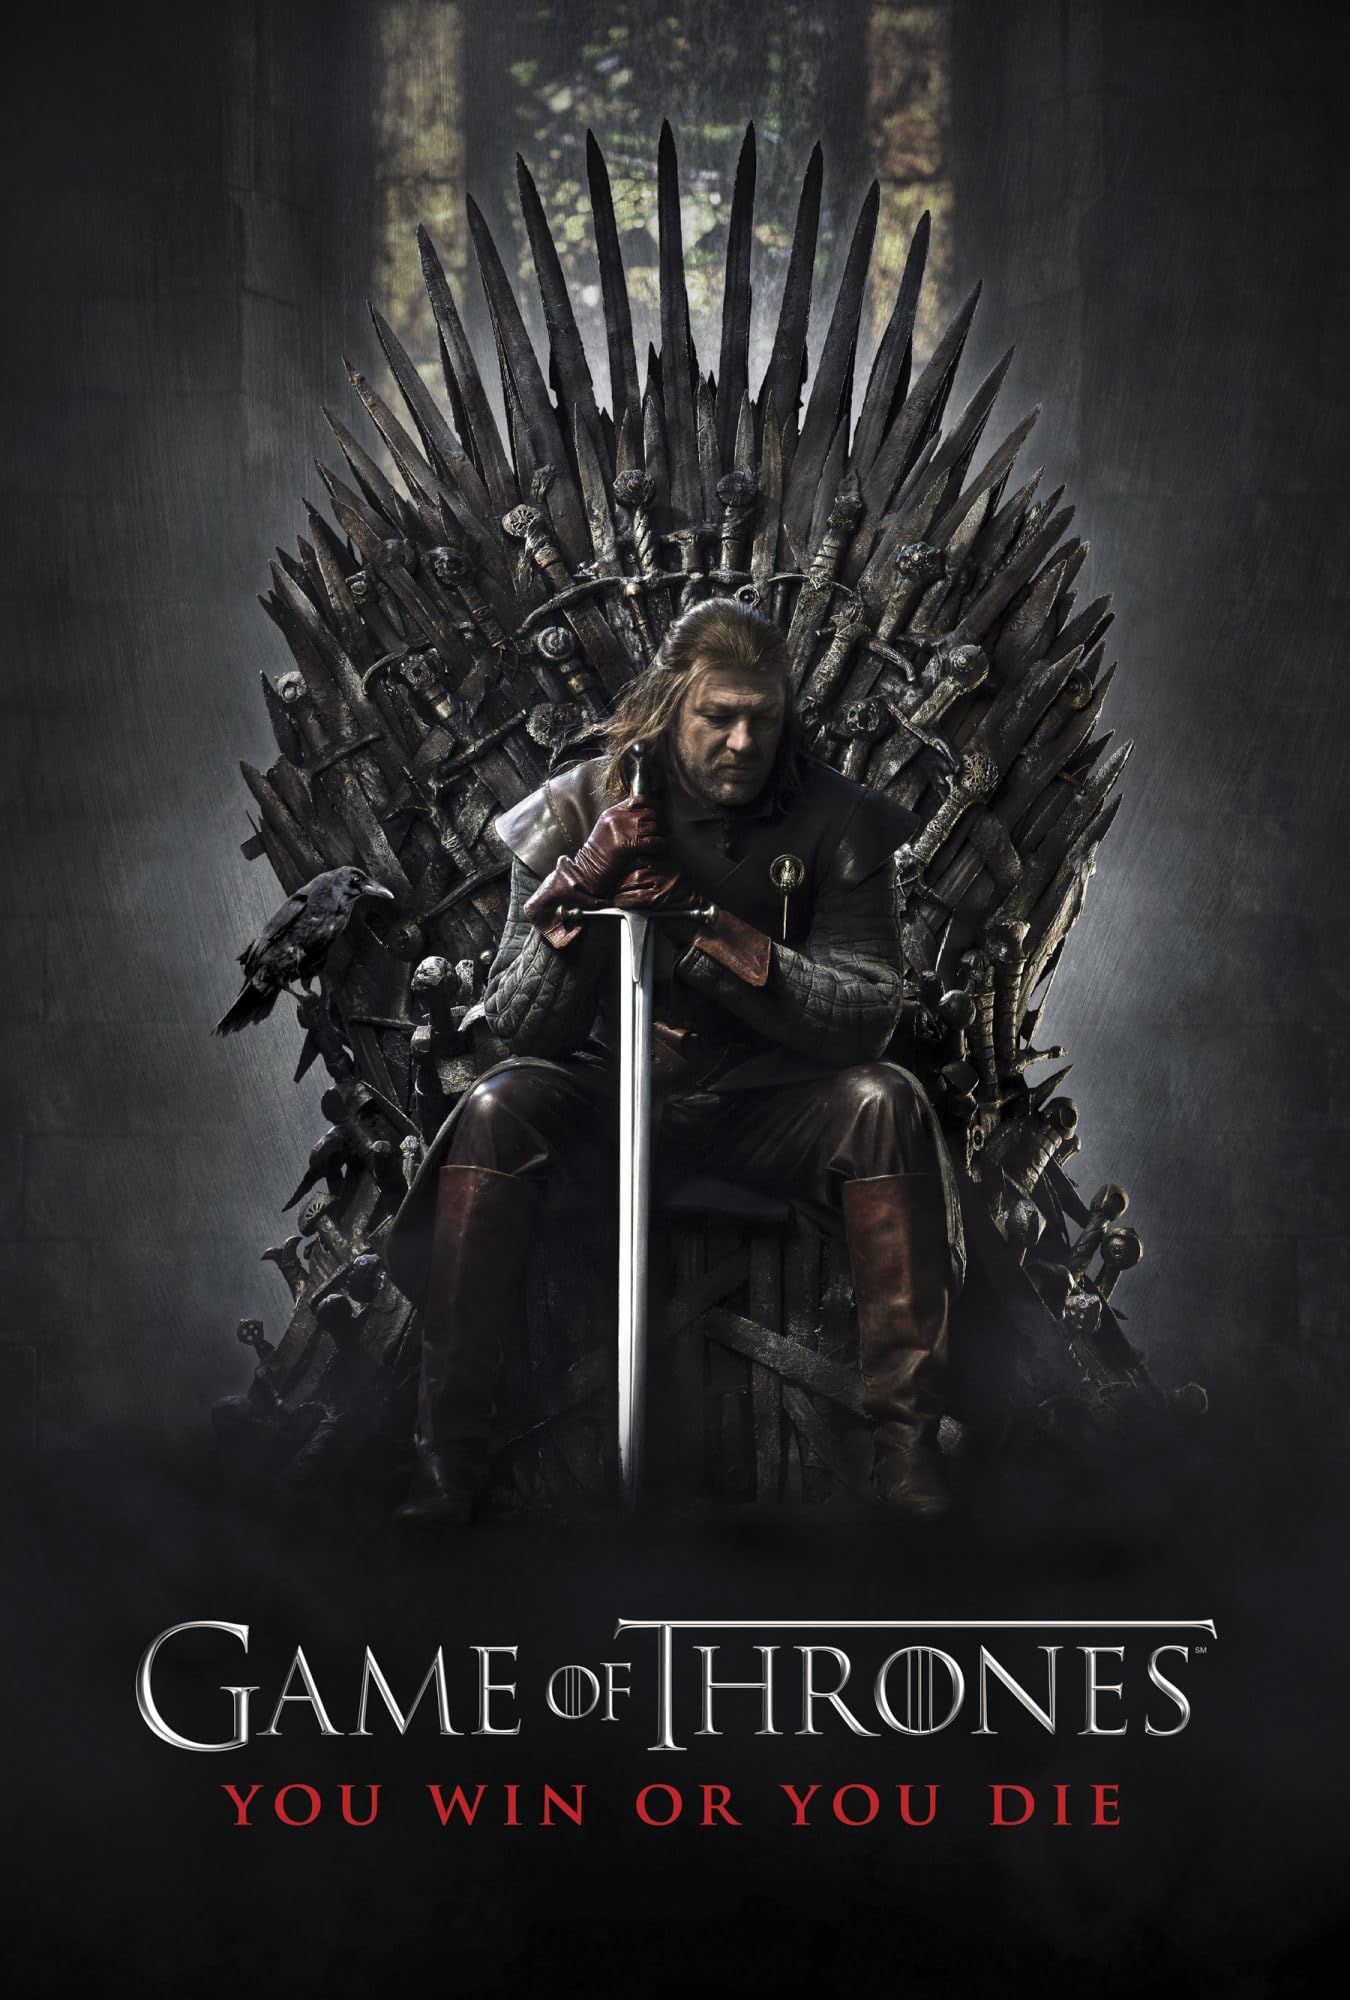 Game of Thrones (Season 2) Hindi Dubbed HBO Series HDRip 720p 480p